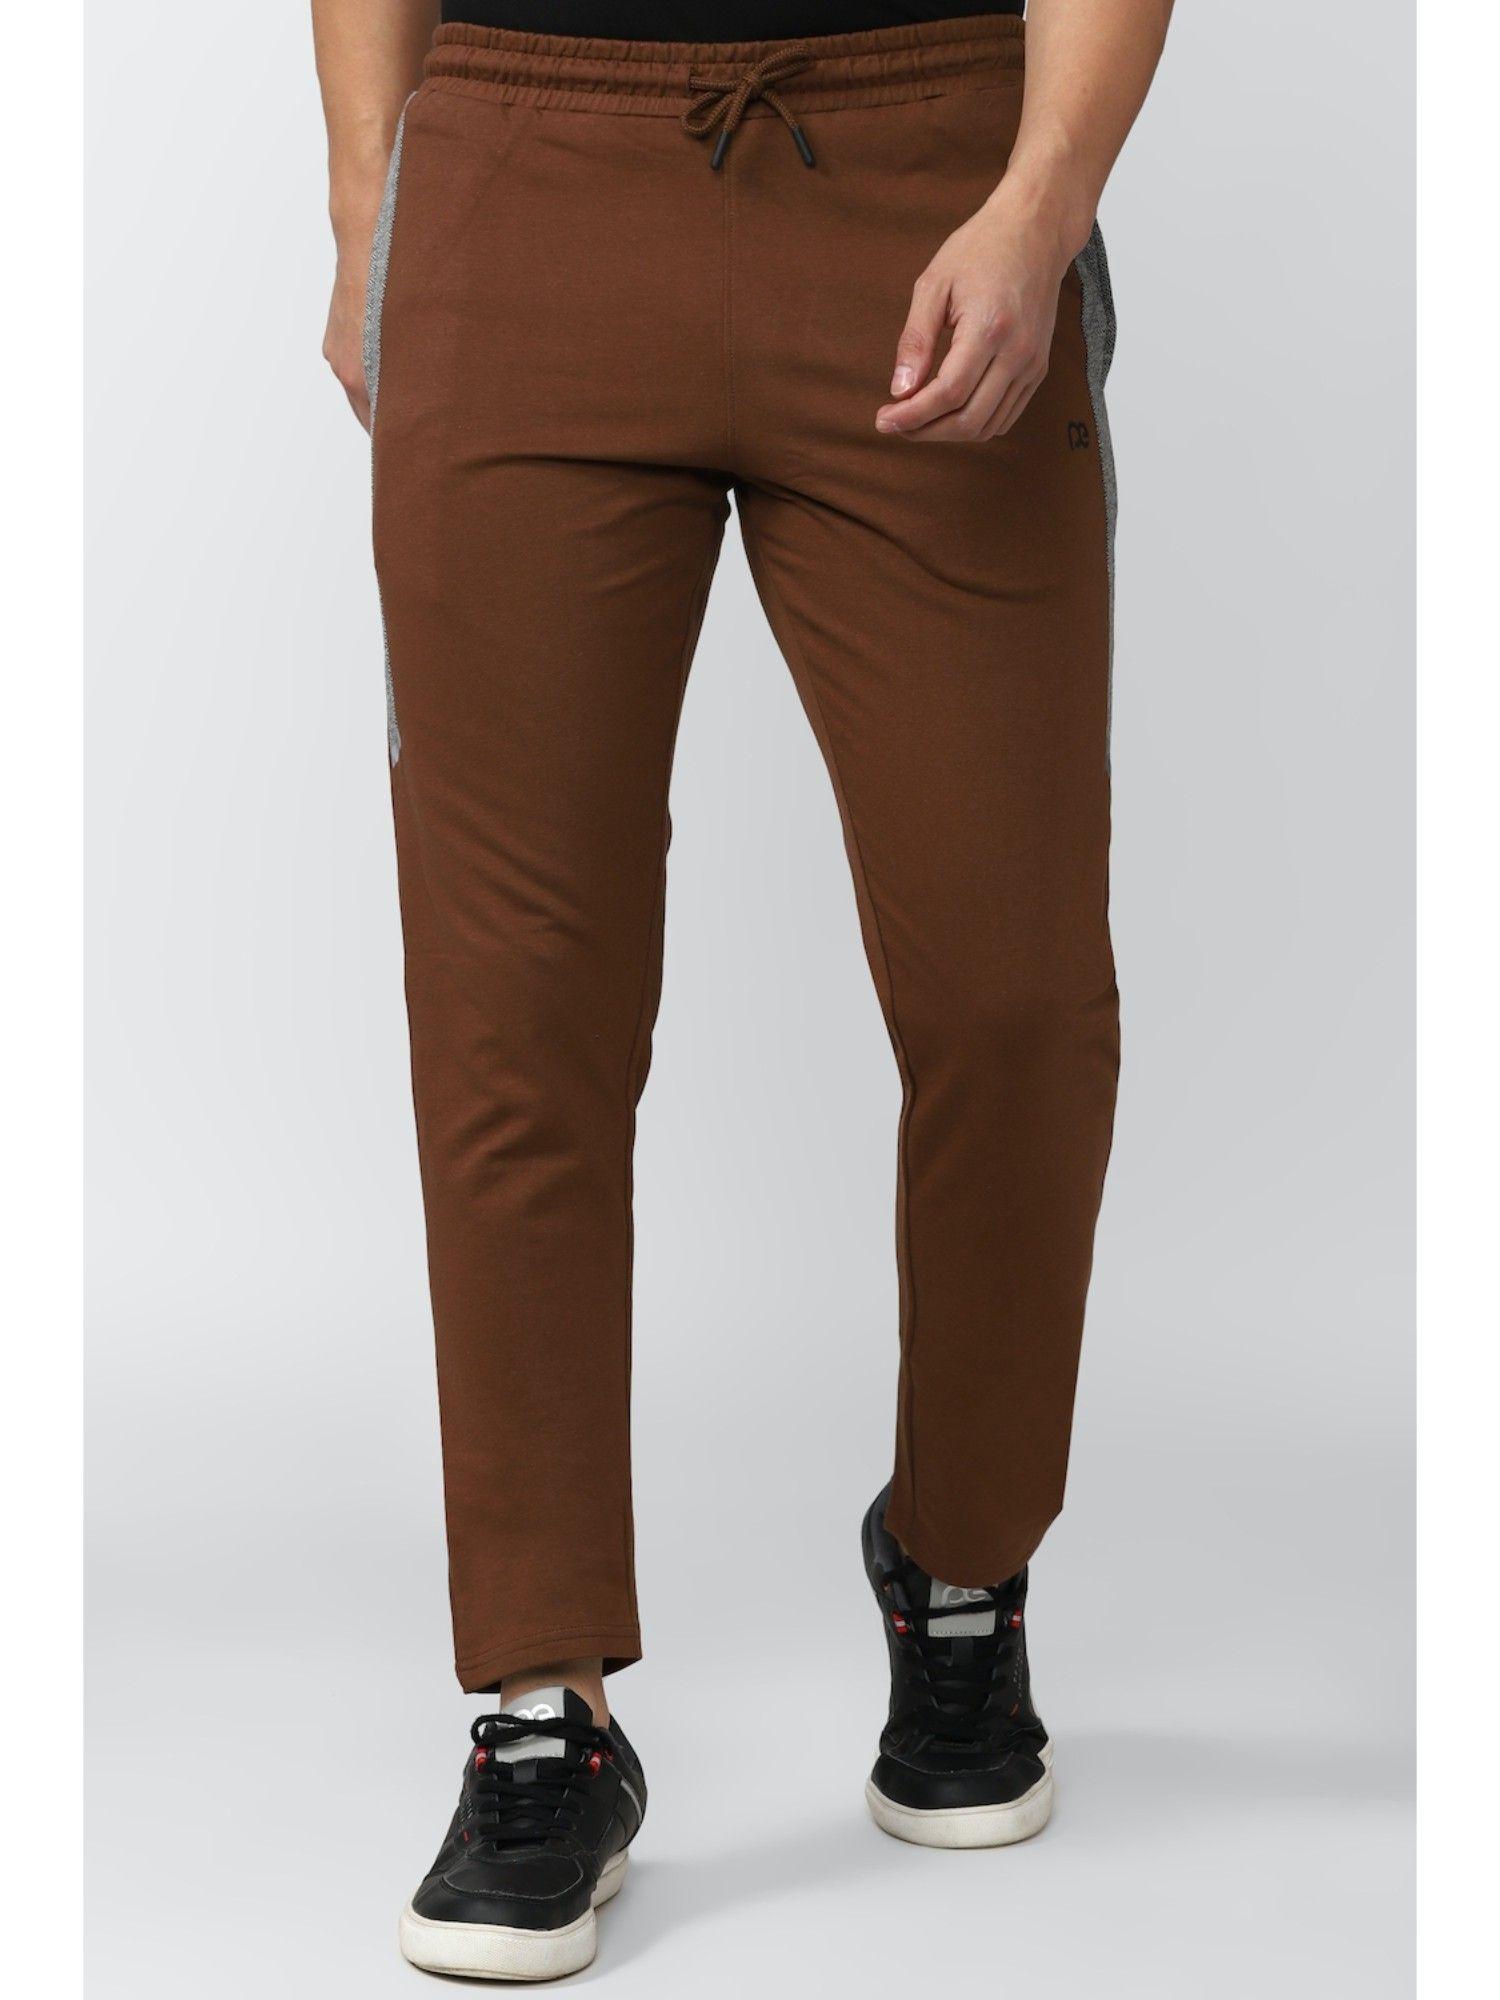 men-brown-solid-casual-track-pants